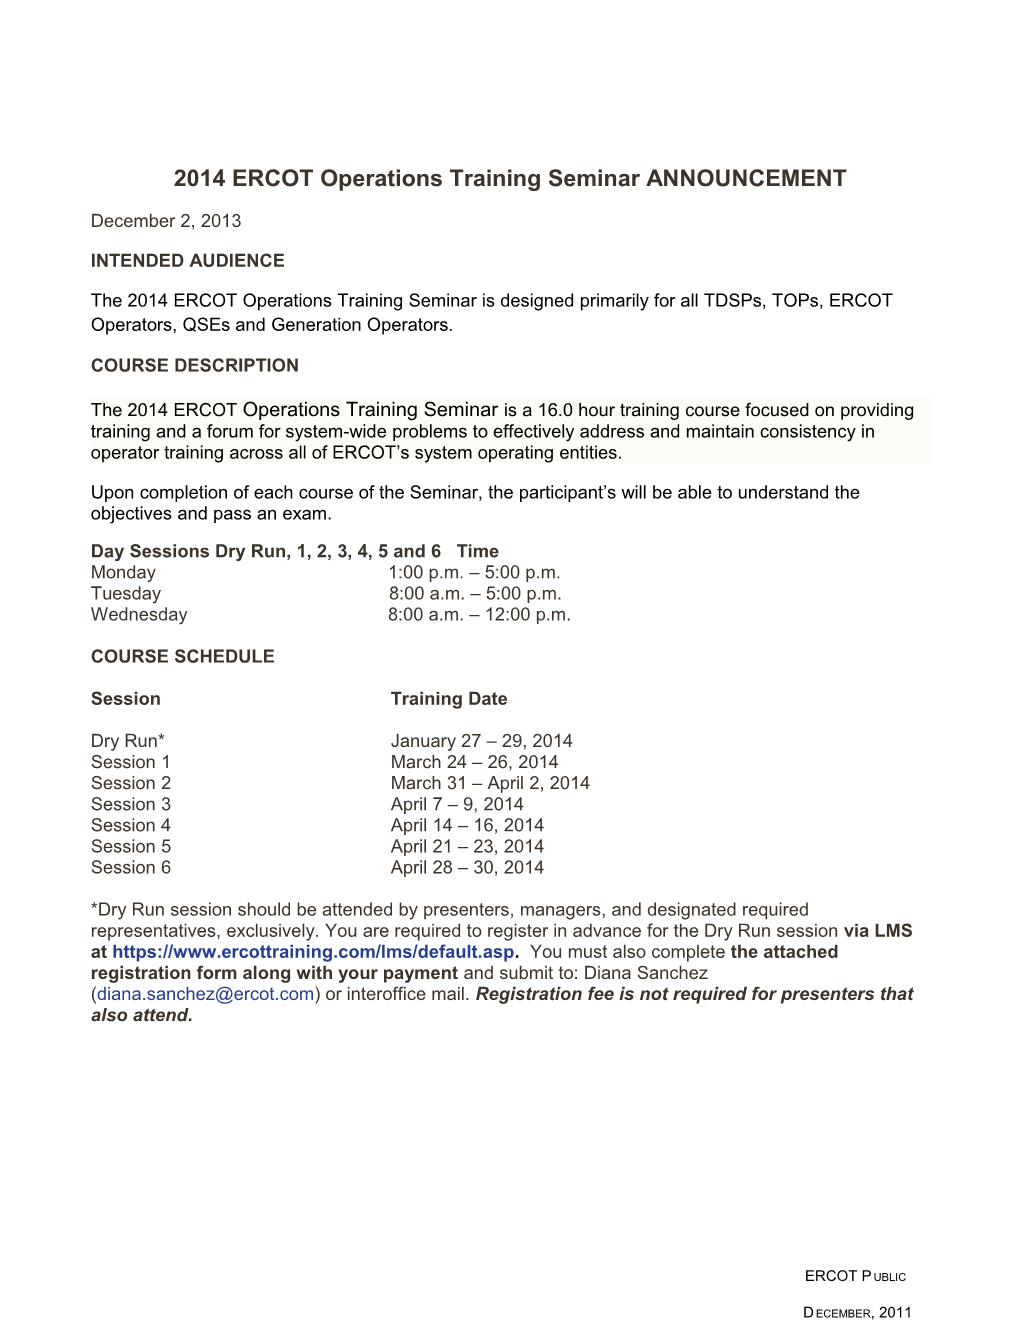 2014ERCOT Operations Training Seminar ANNOUNCEMENT